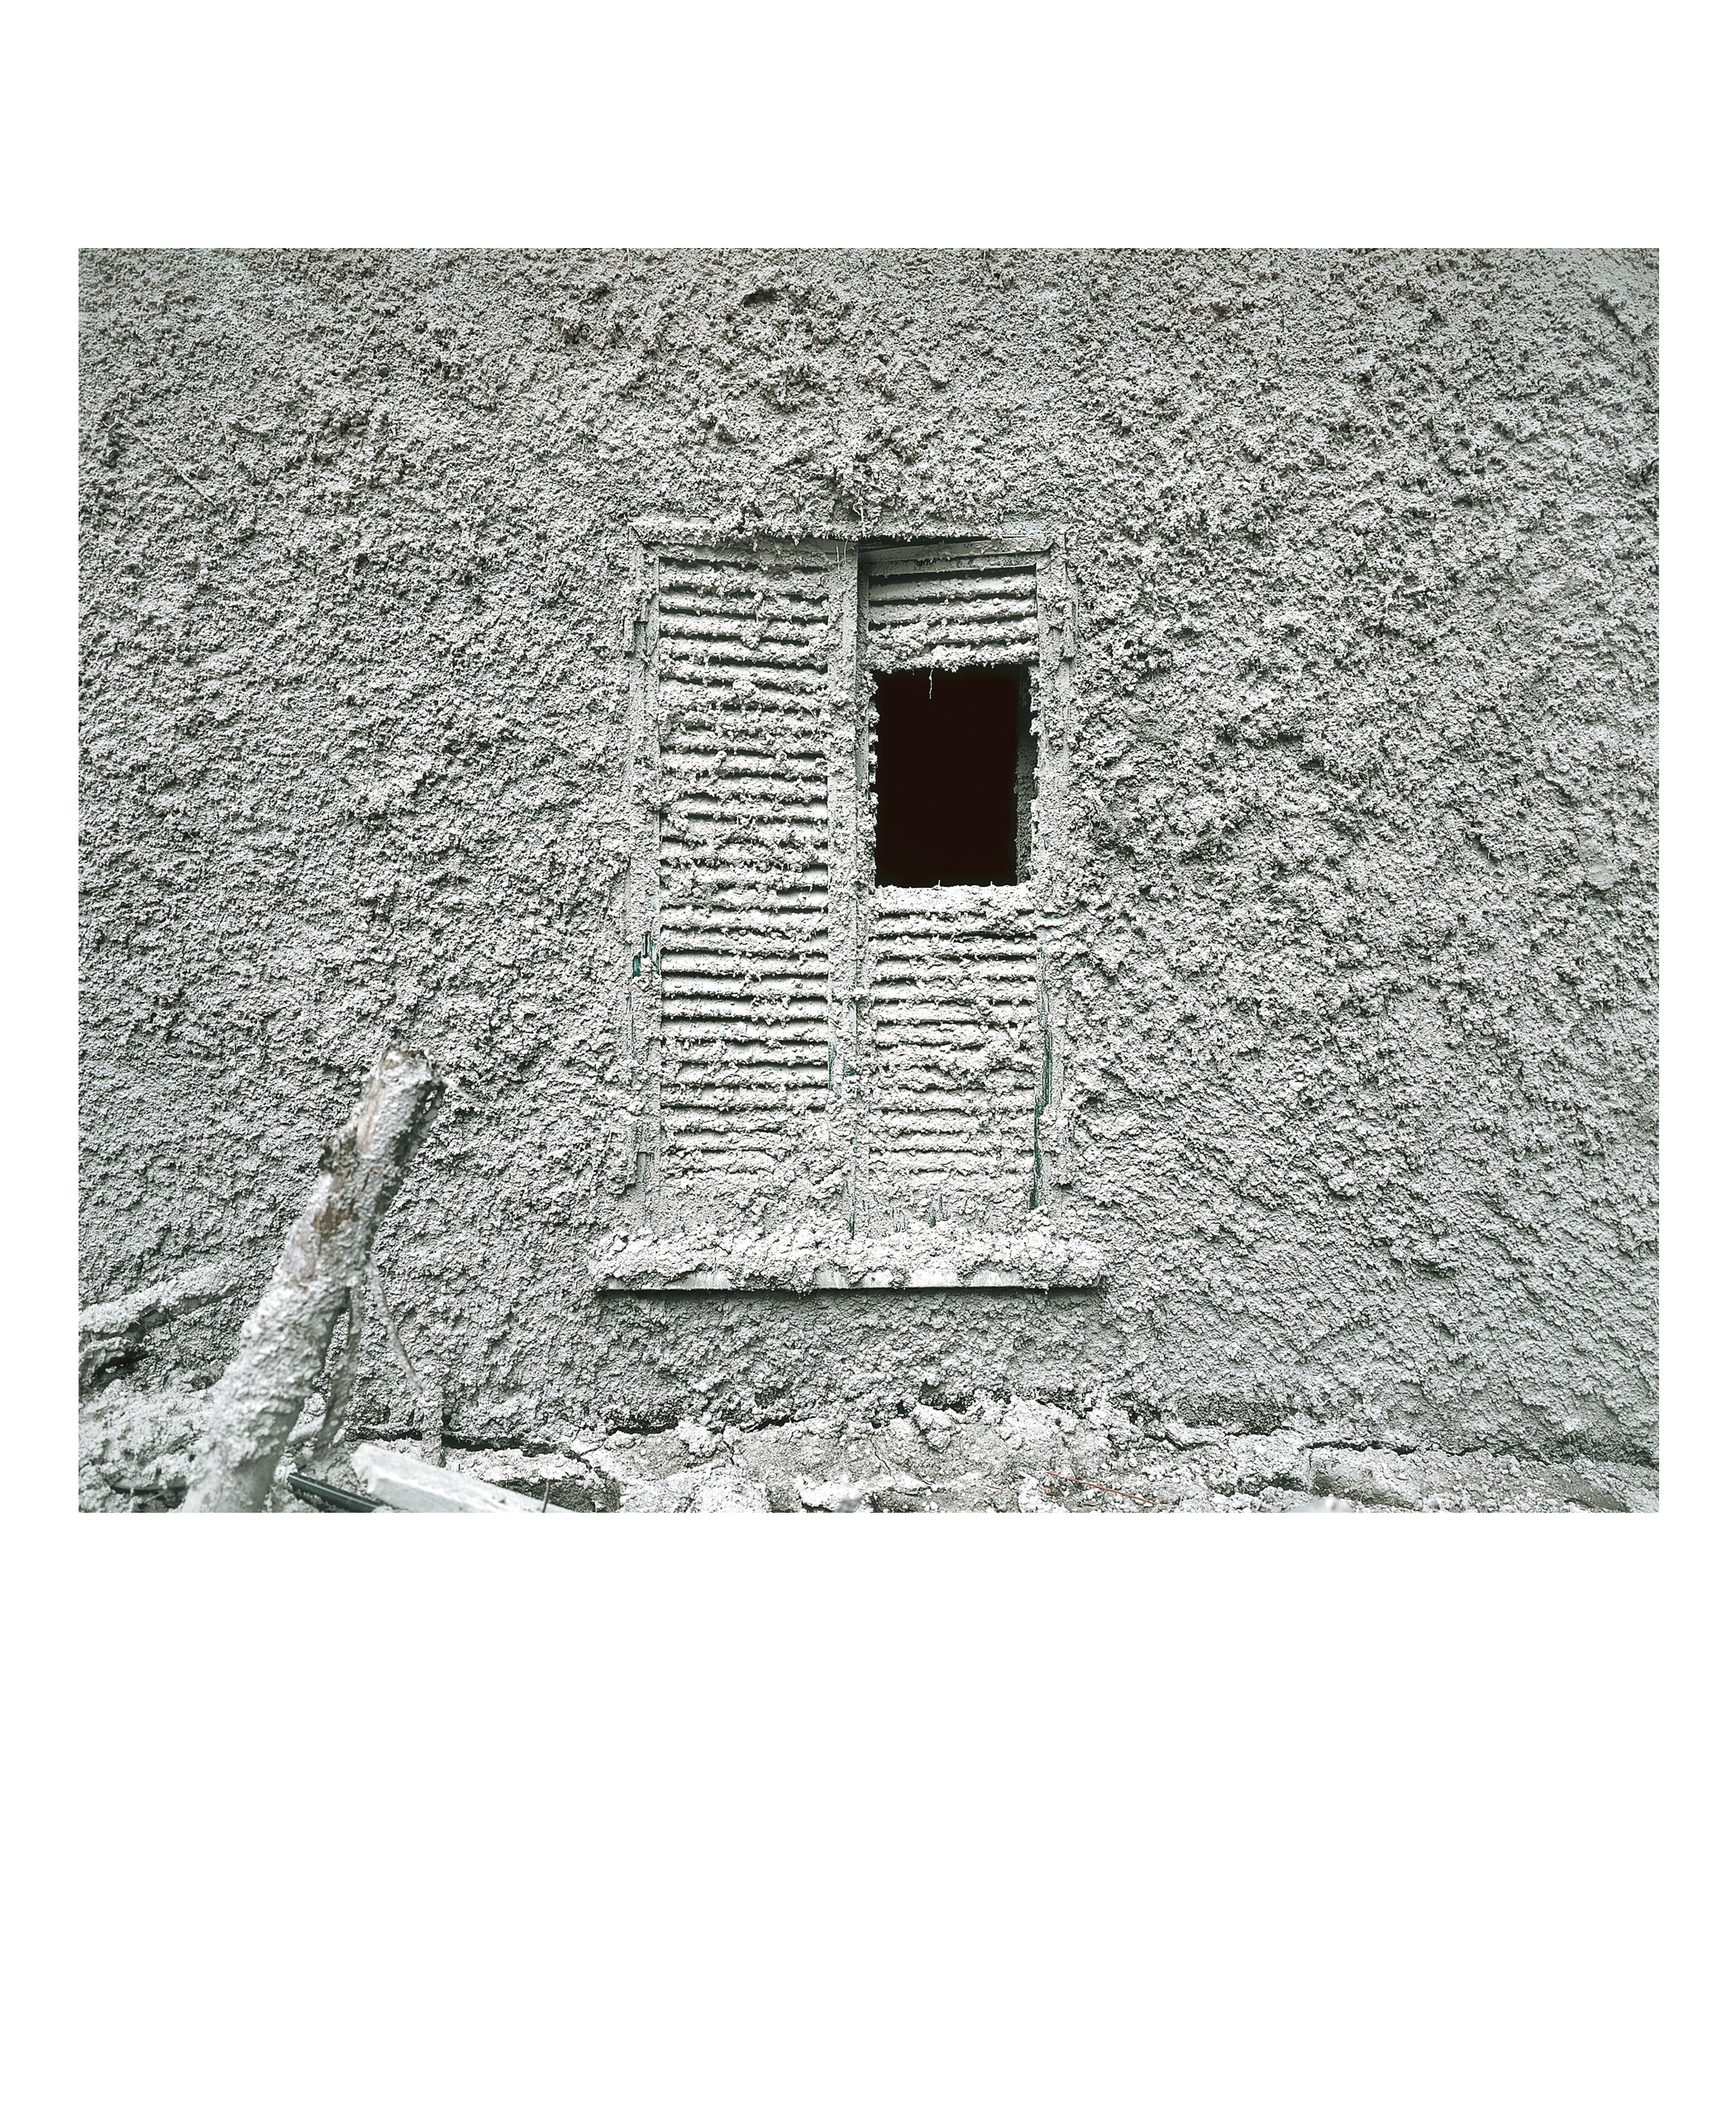 Window (After Mudslide) Ischia, Campania